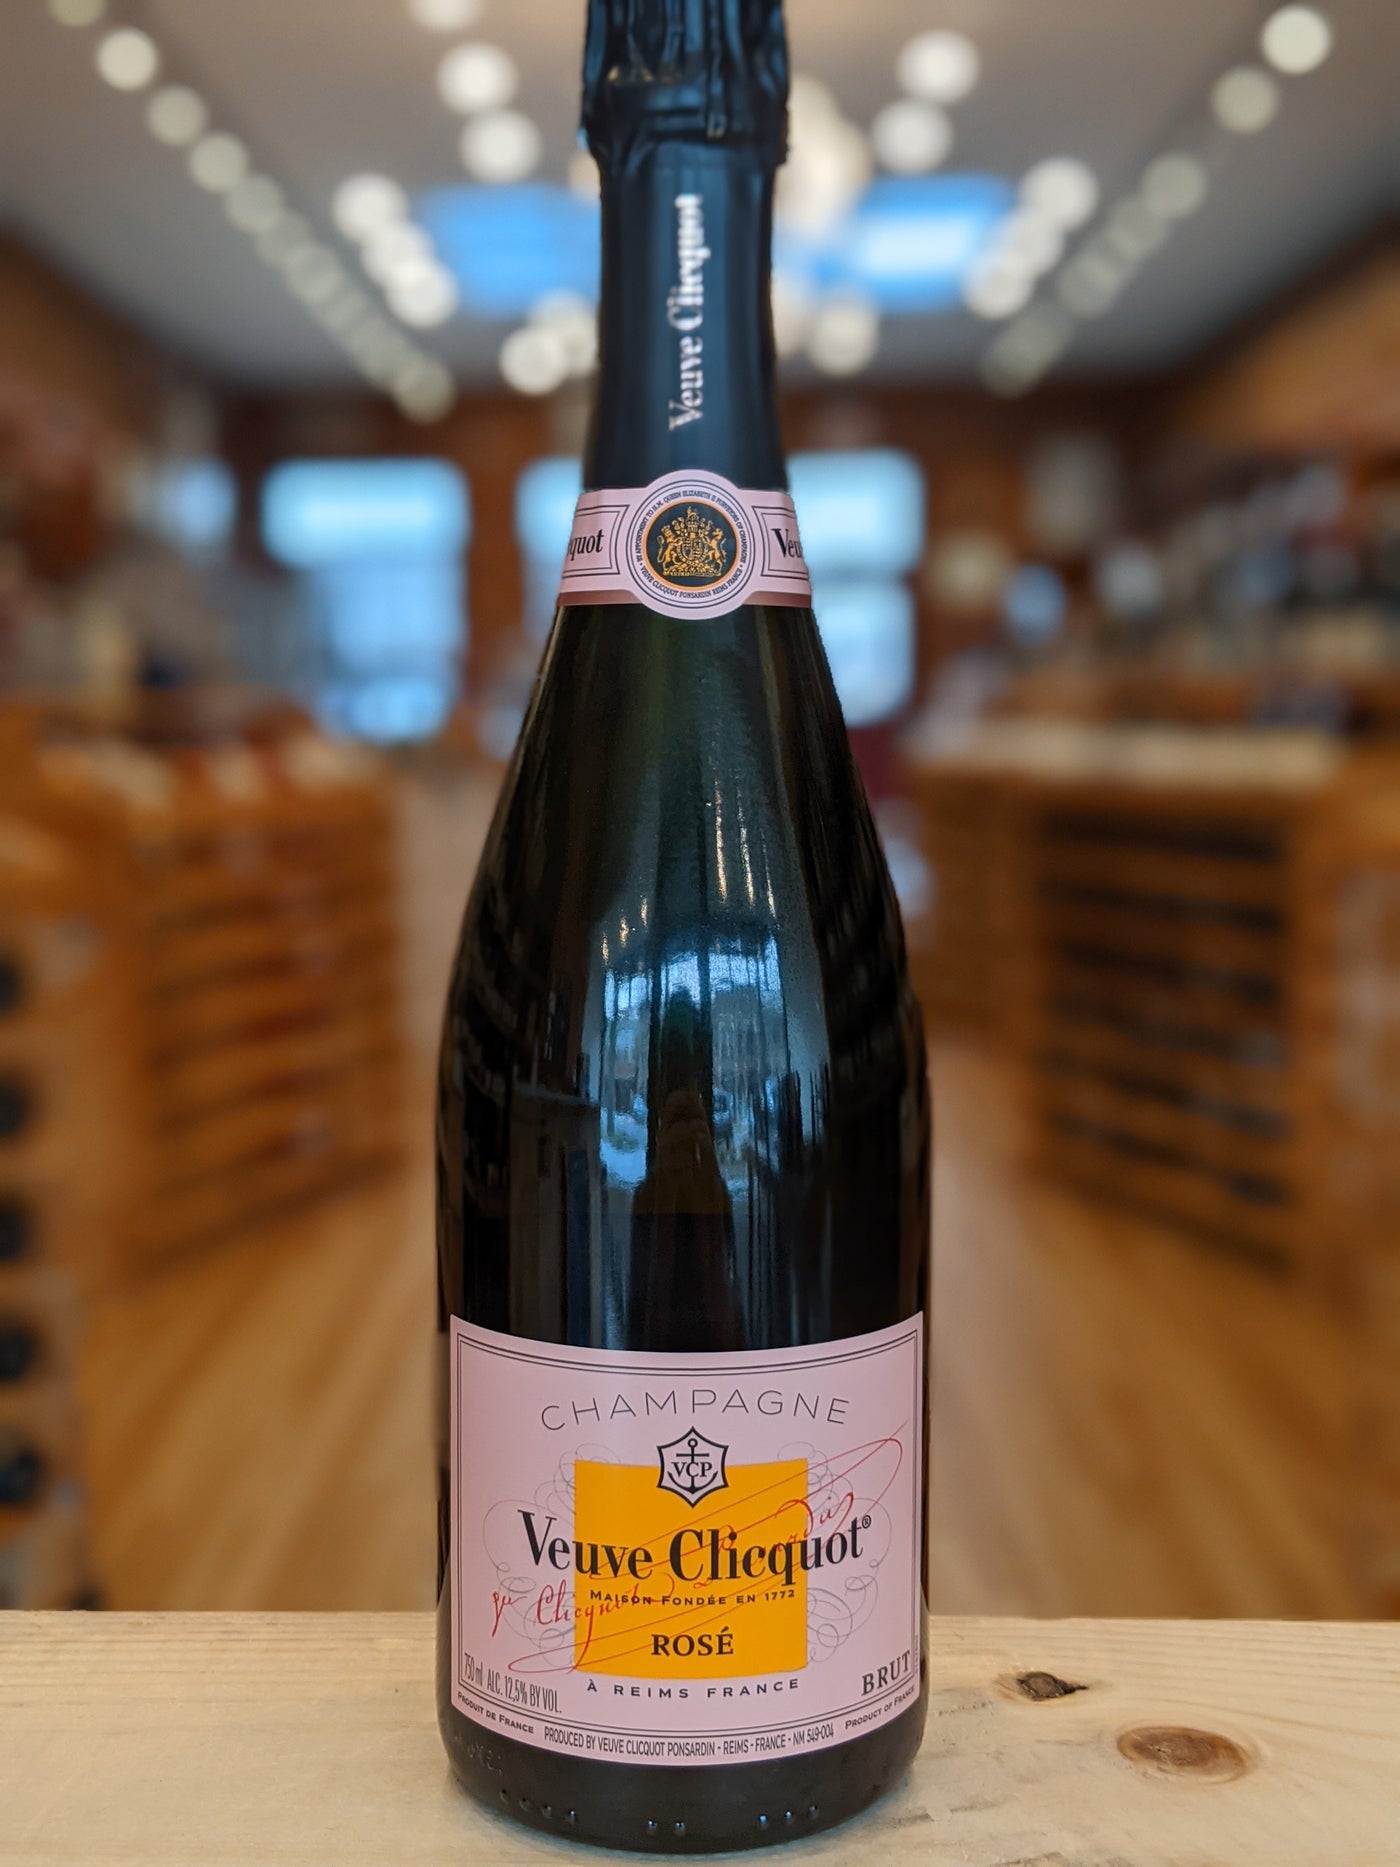 Veuve Clicquot Brut Rose Champagne, A Reims, France - 750 ml bottle